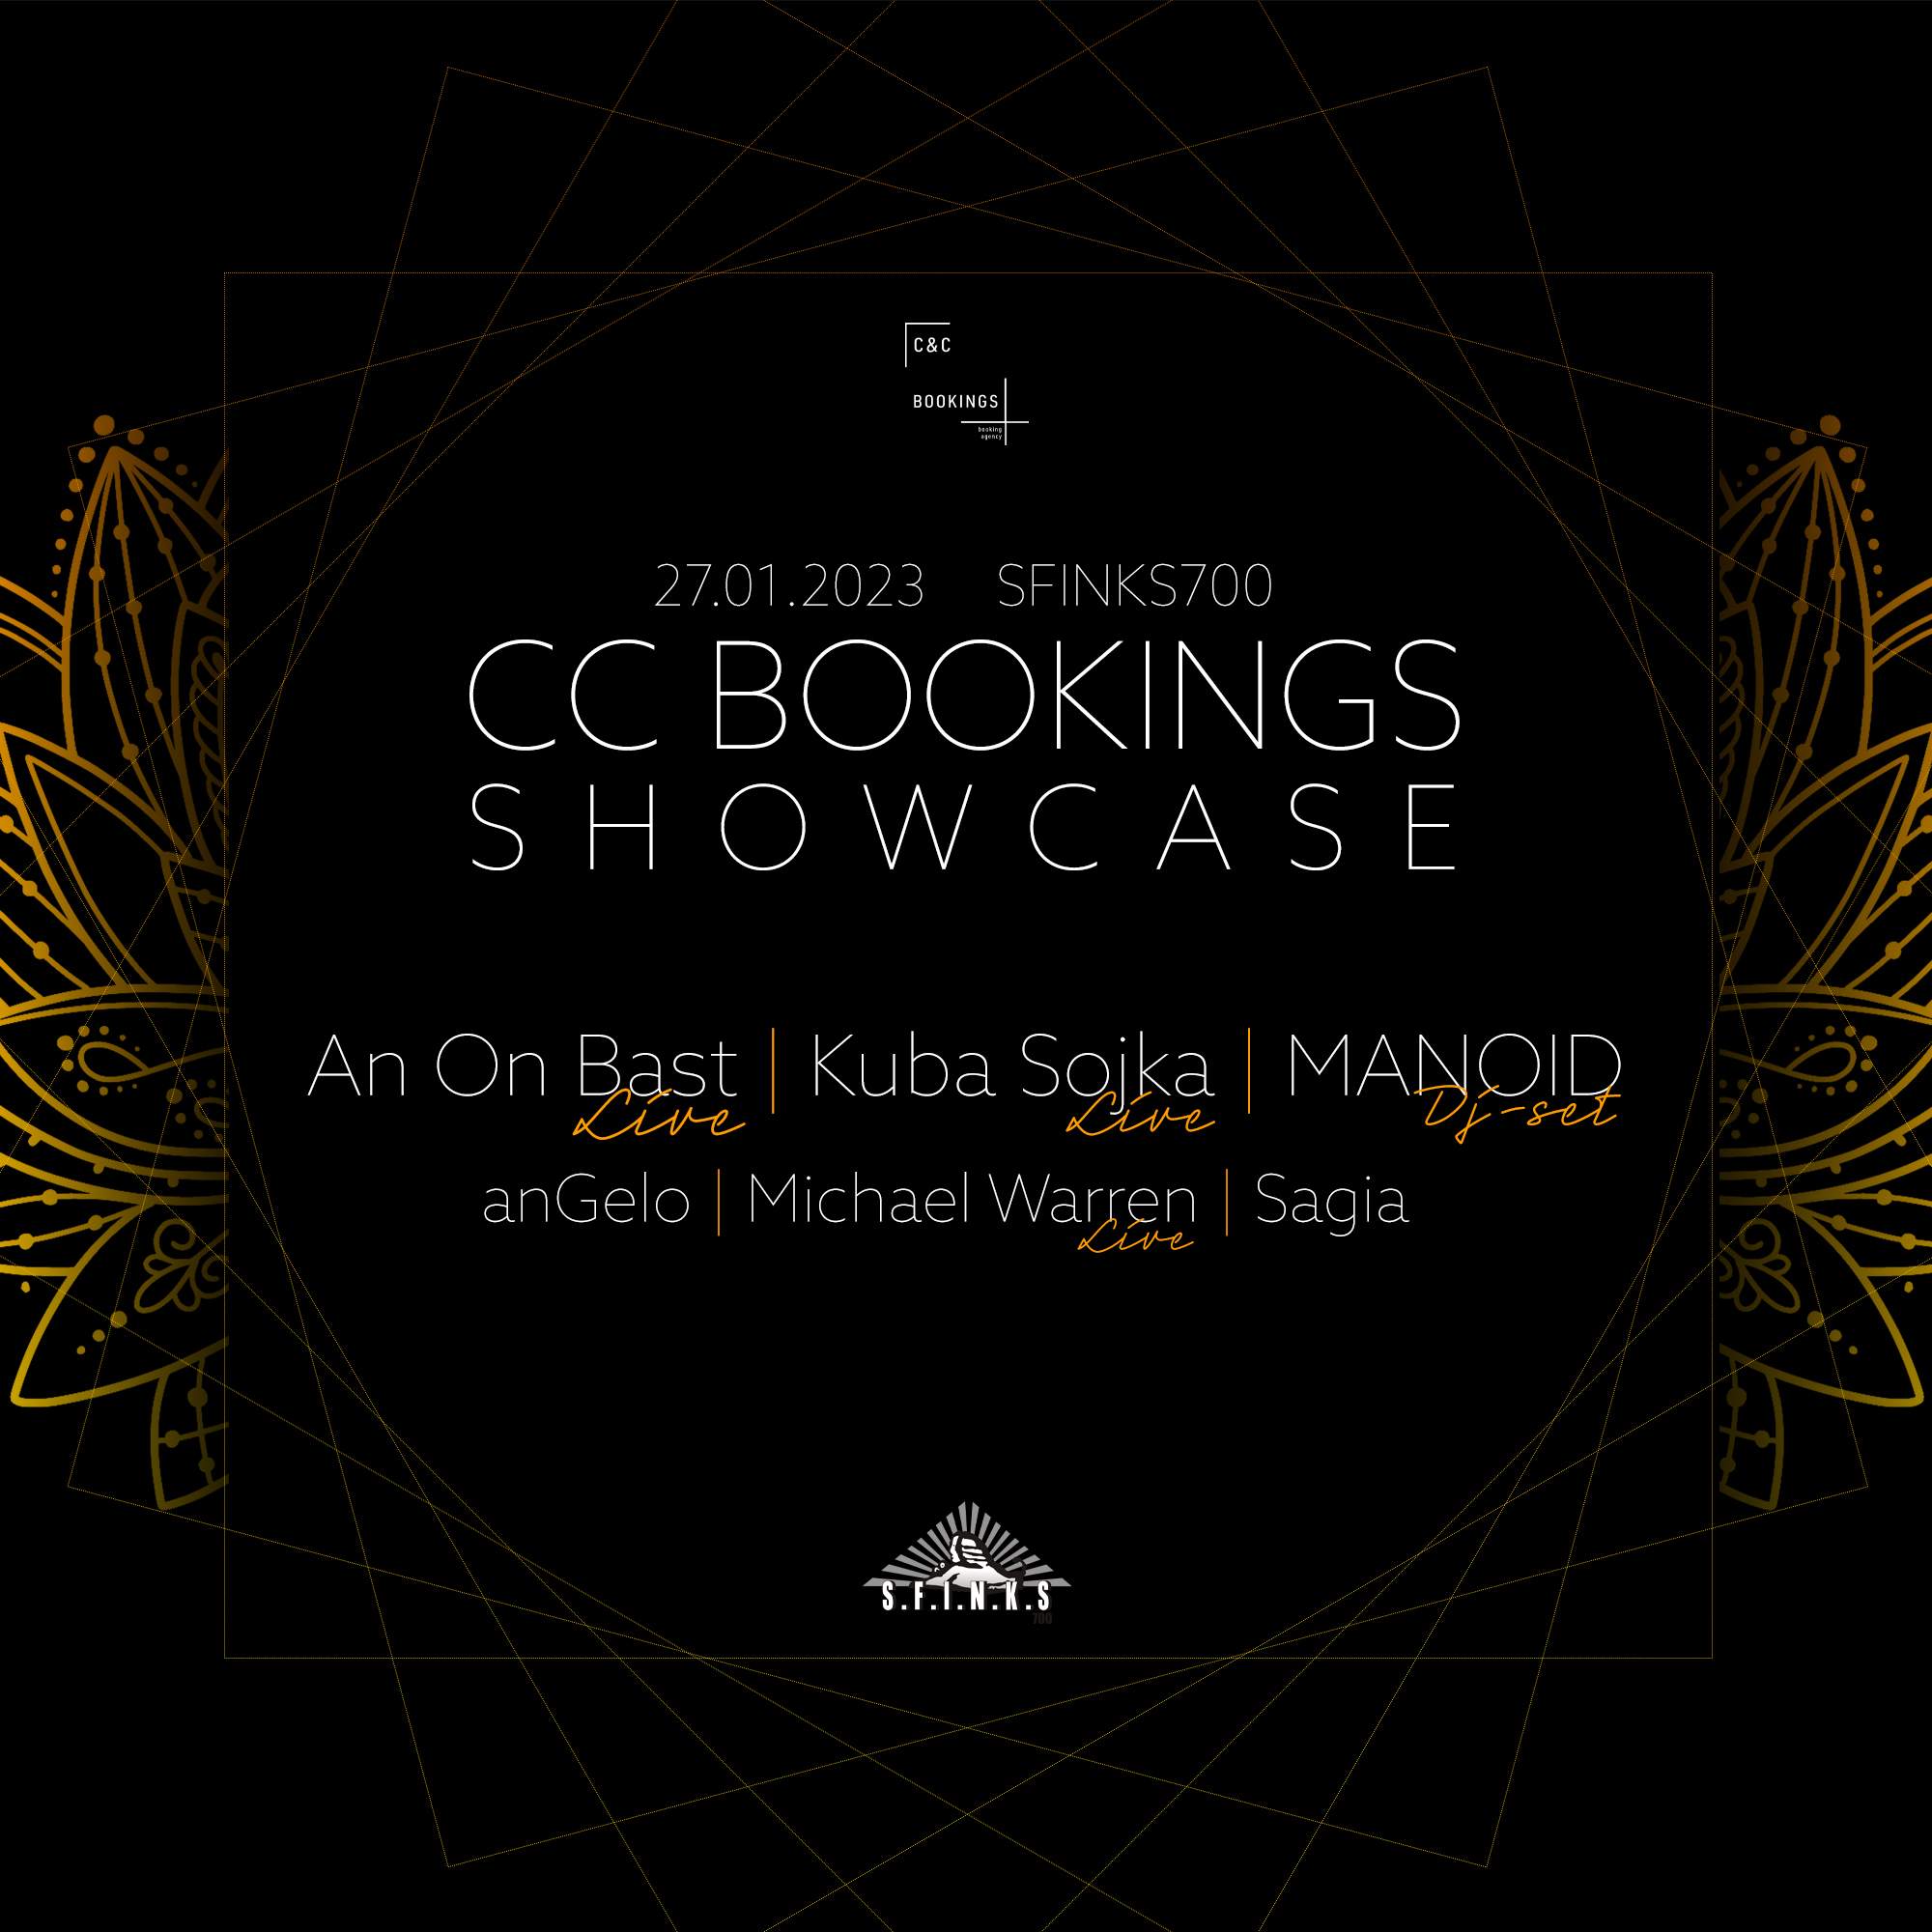 CC Bookings Showcase: An On Bast / Kuba Sojka / Manoid - フライヤー表